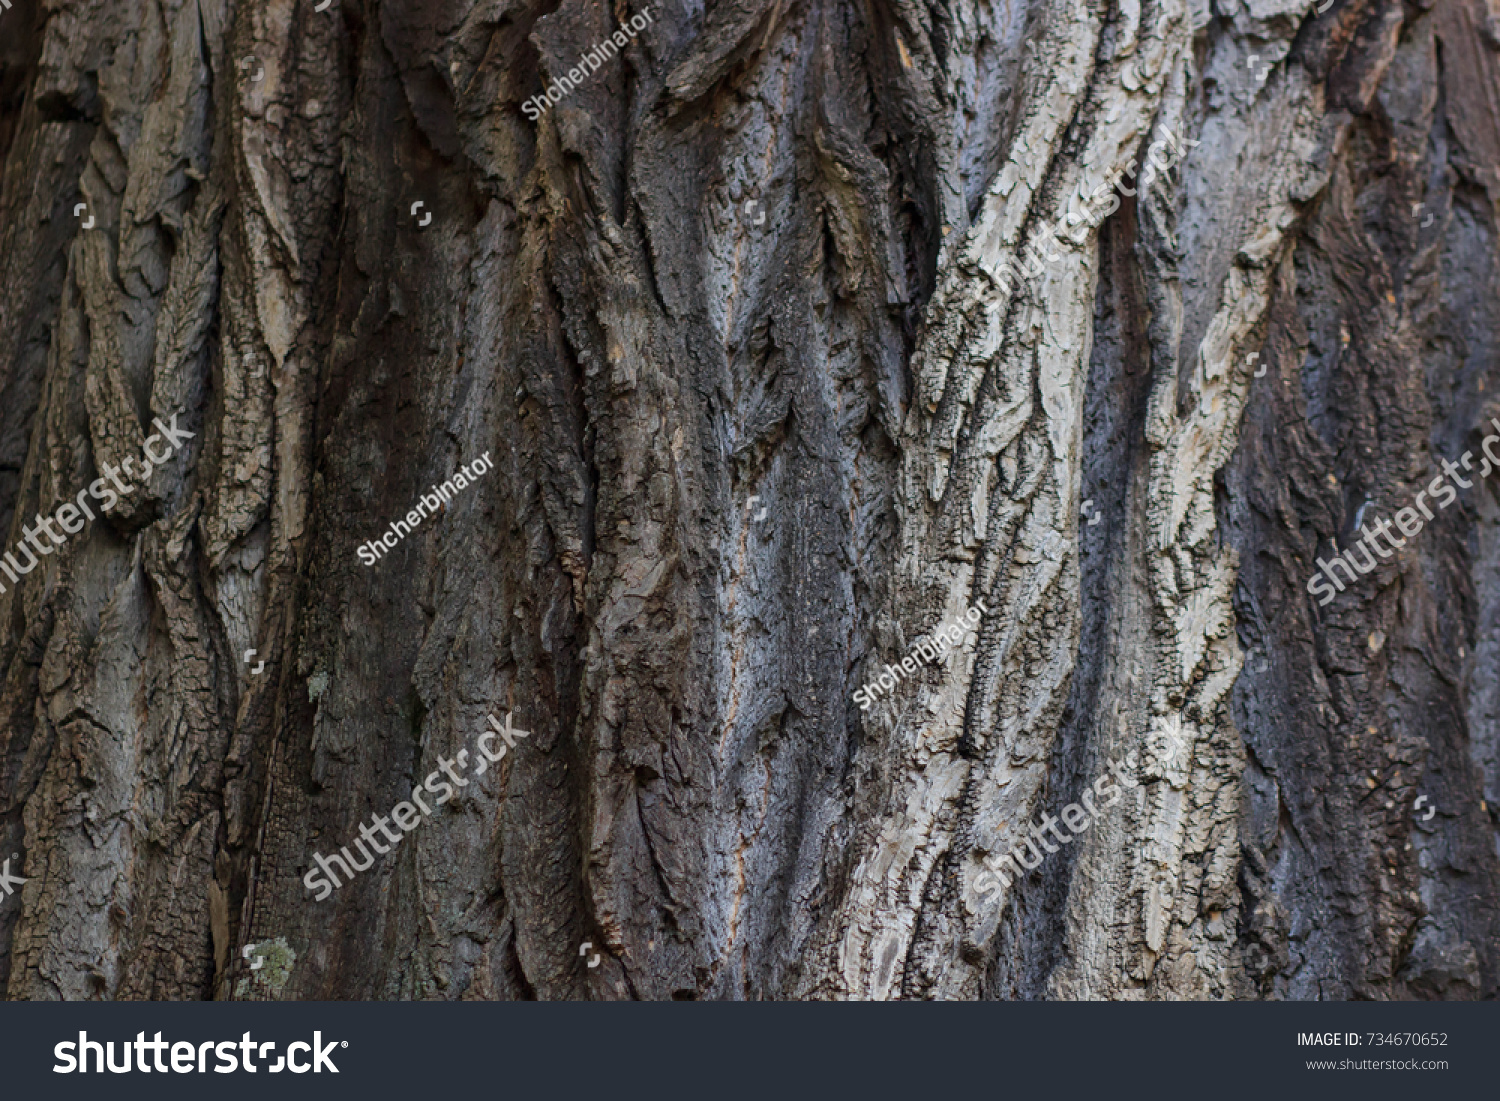 old Tree bark texture background #734670652